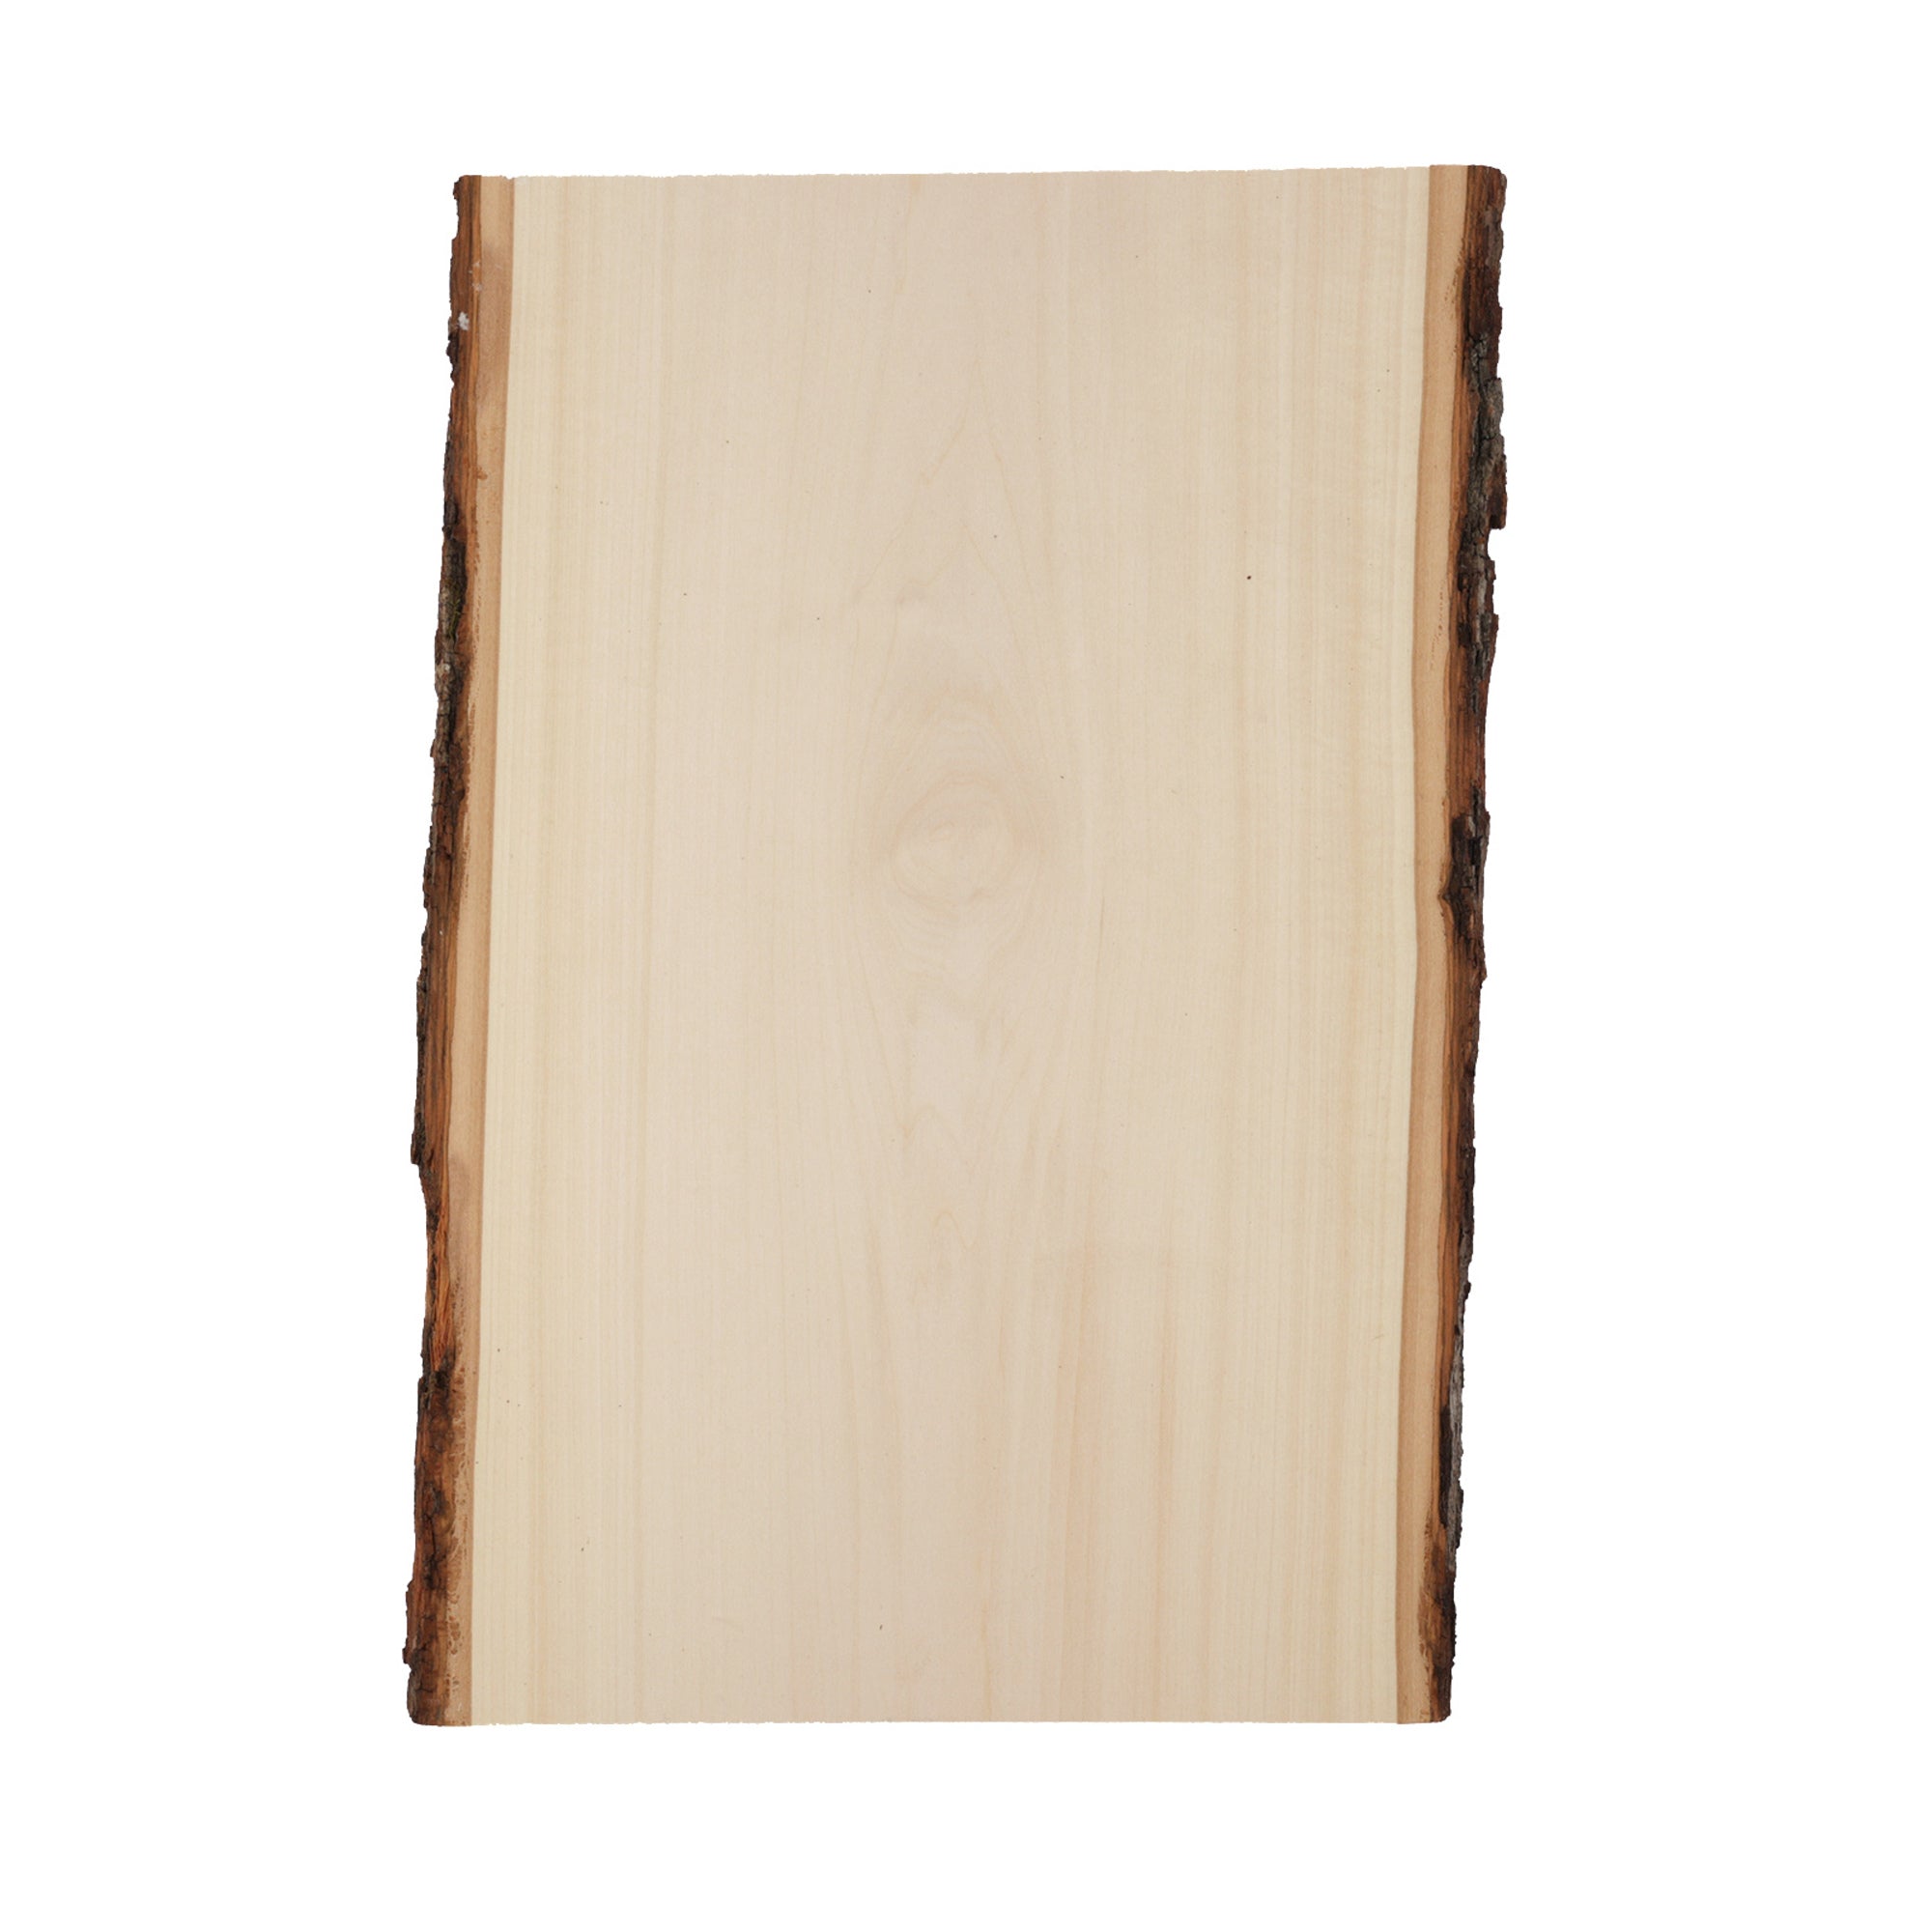 2 x 2 x 12 Basswood Carving Wood Blocks Craft Lumber *KILN DRIED* 6 Pcs